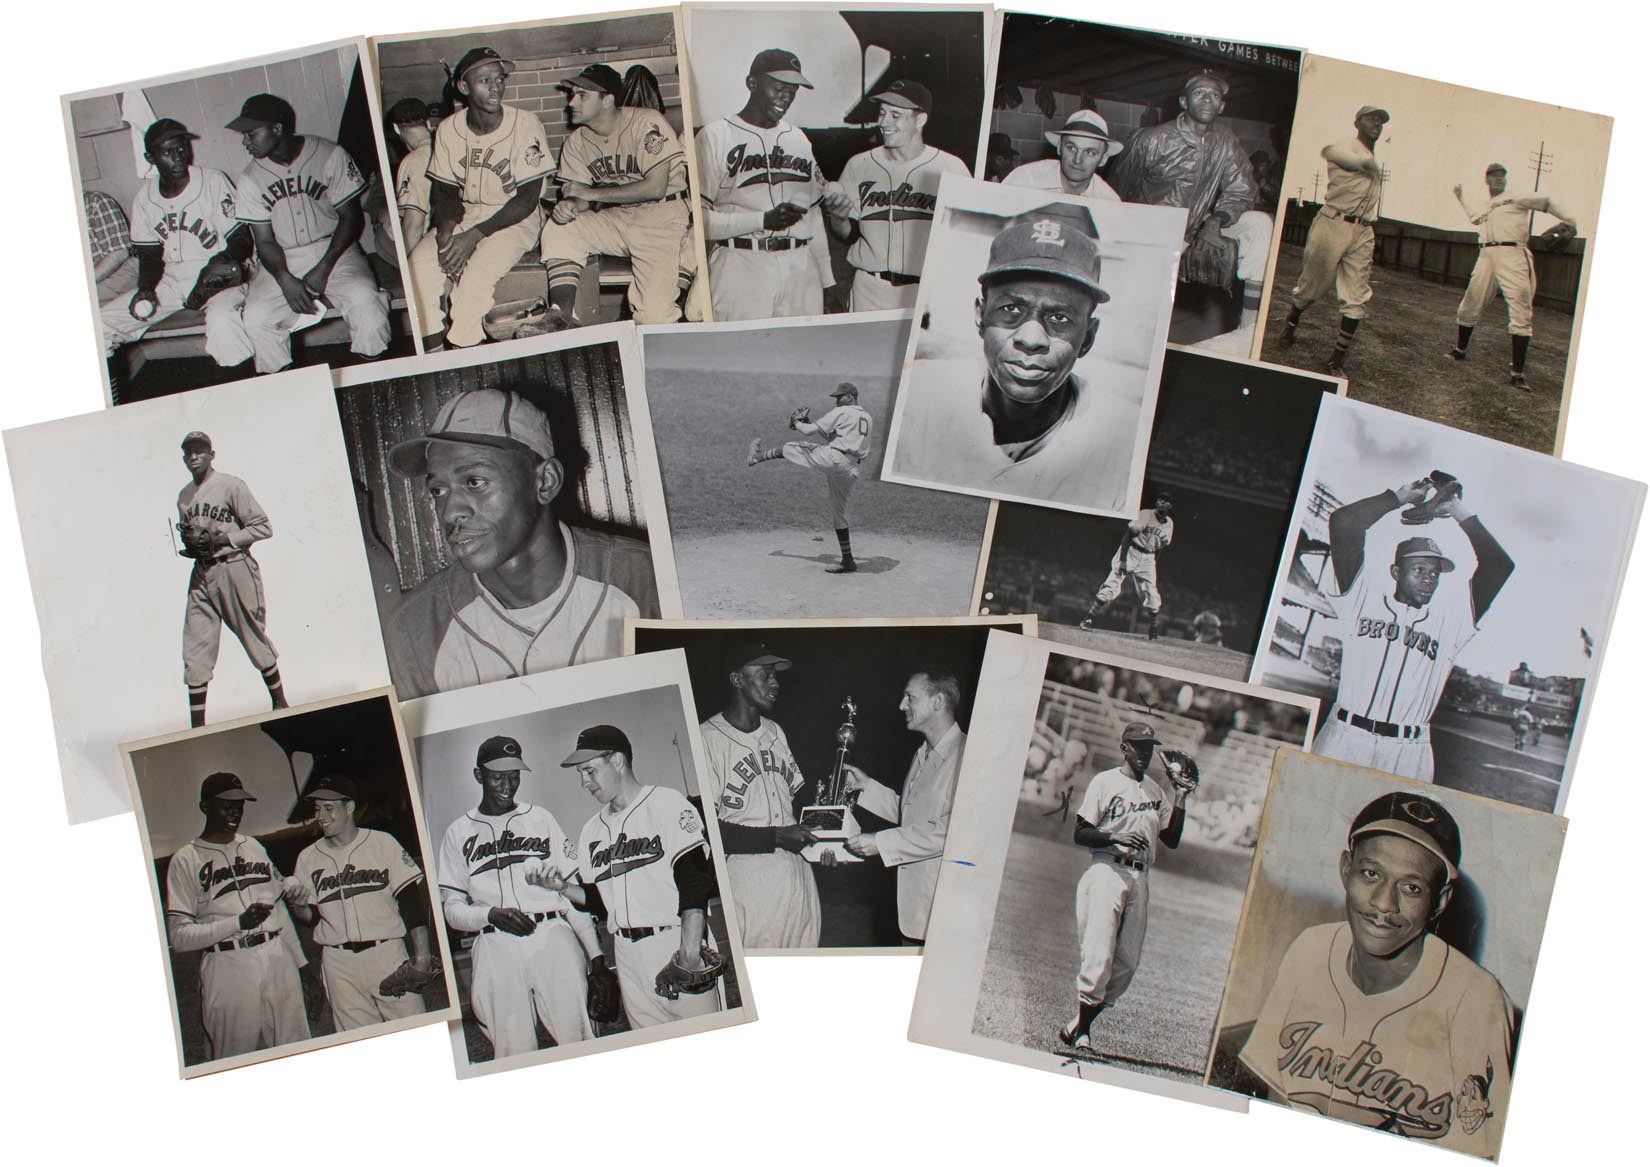 Negro League, Latin, Japanese & International Base - Incredible Satchel Paige Photo Collection w/Negro League (16)